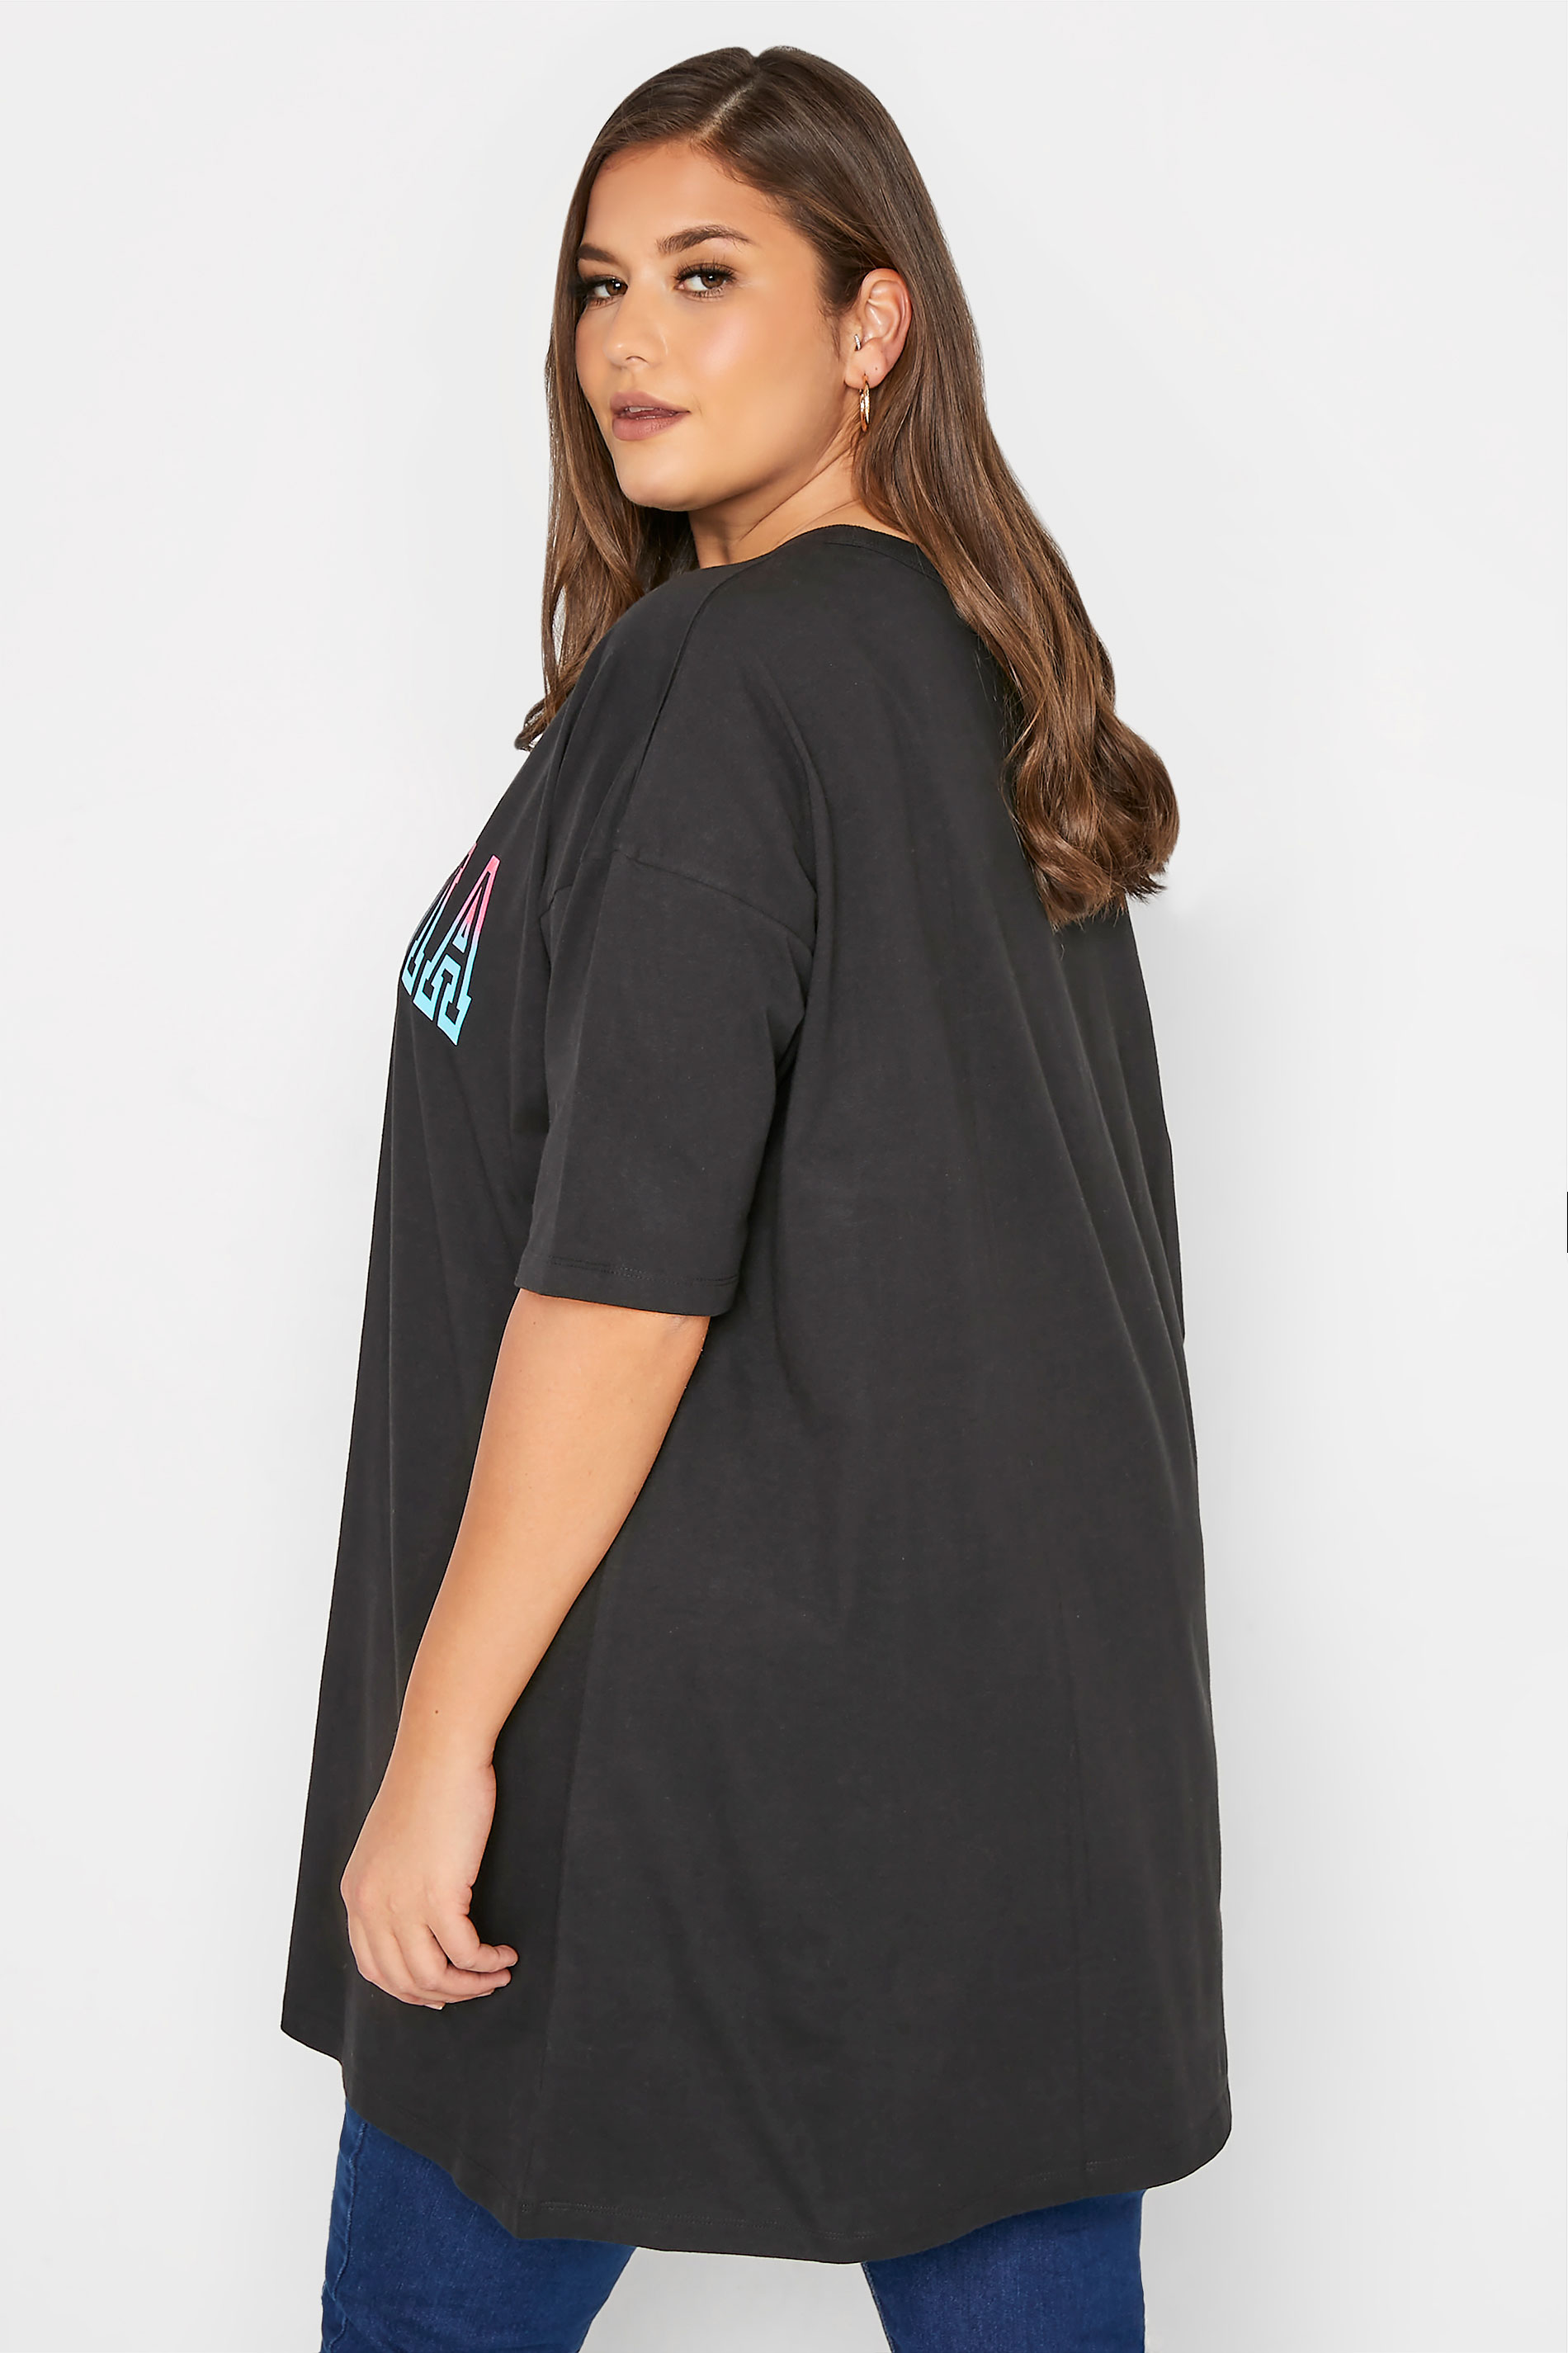 Grande taille  Tops Grande taille  Tops à Slogans | Robe-T-Shirt Noire Oversize 'California' - JO78246